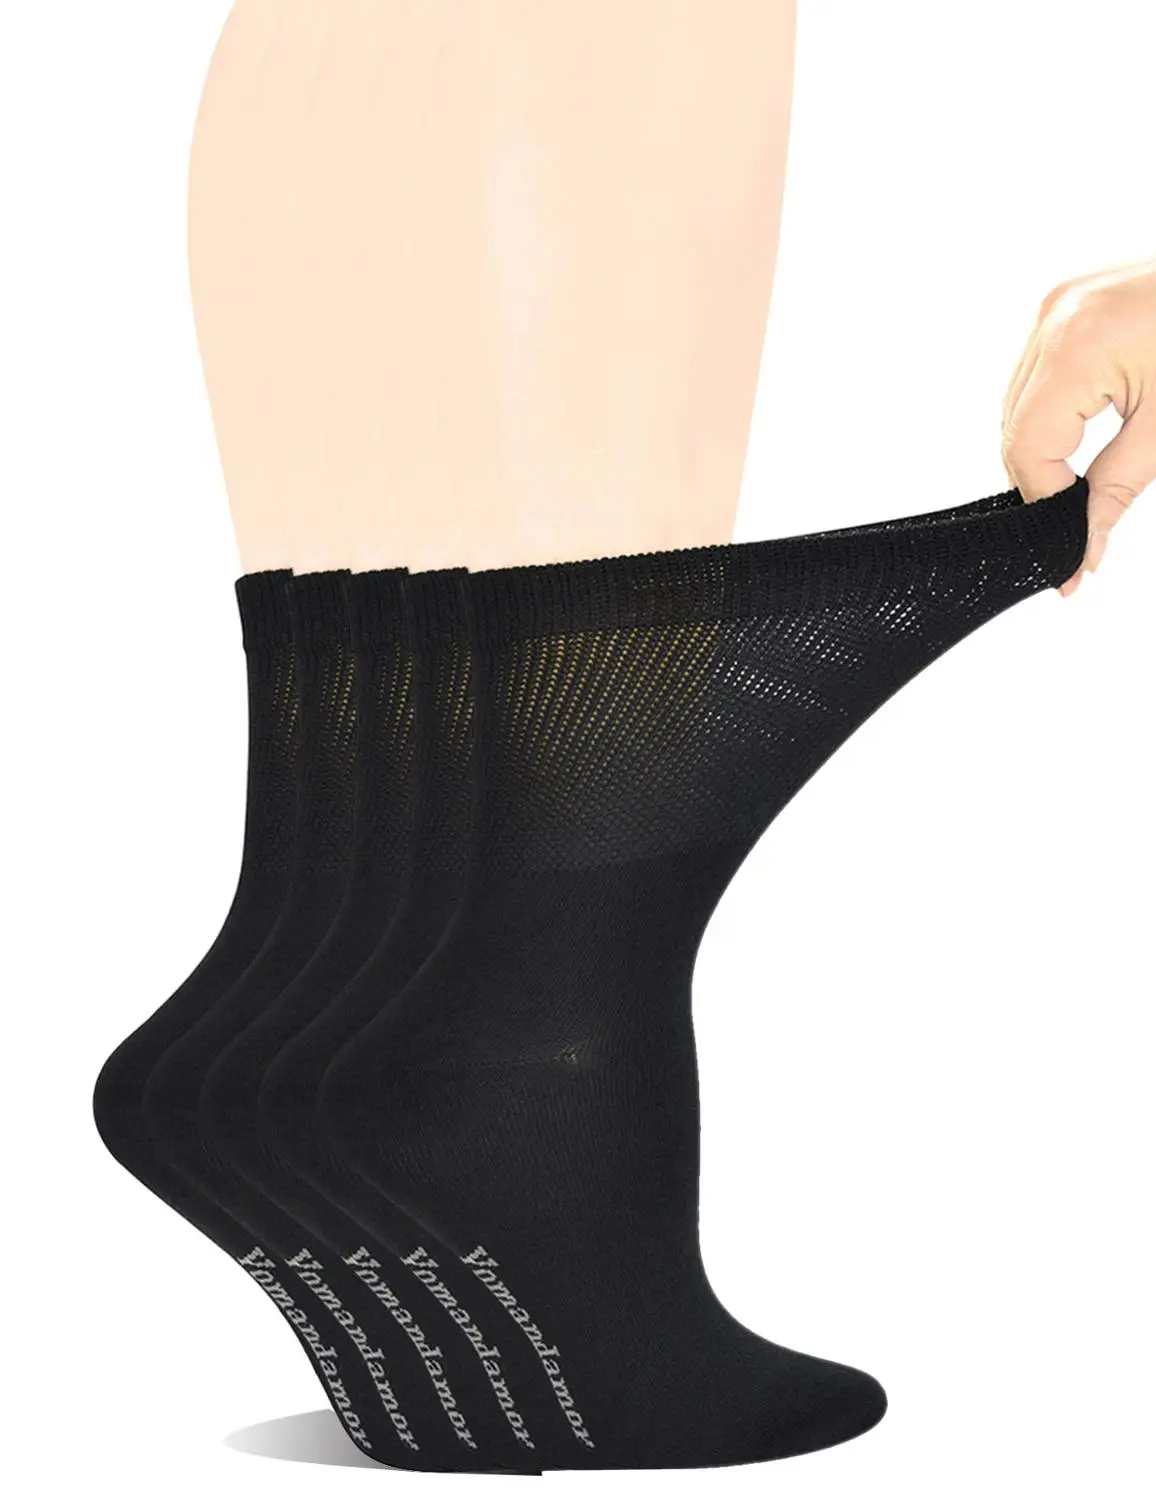 

Yomandamor Women's 5 Pairs Seamless Bamboo Dress/Diabetic Crew Socks with Non-Binding Top, L size